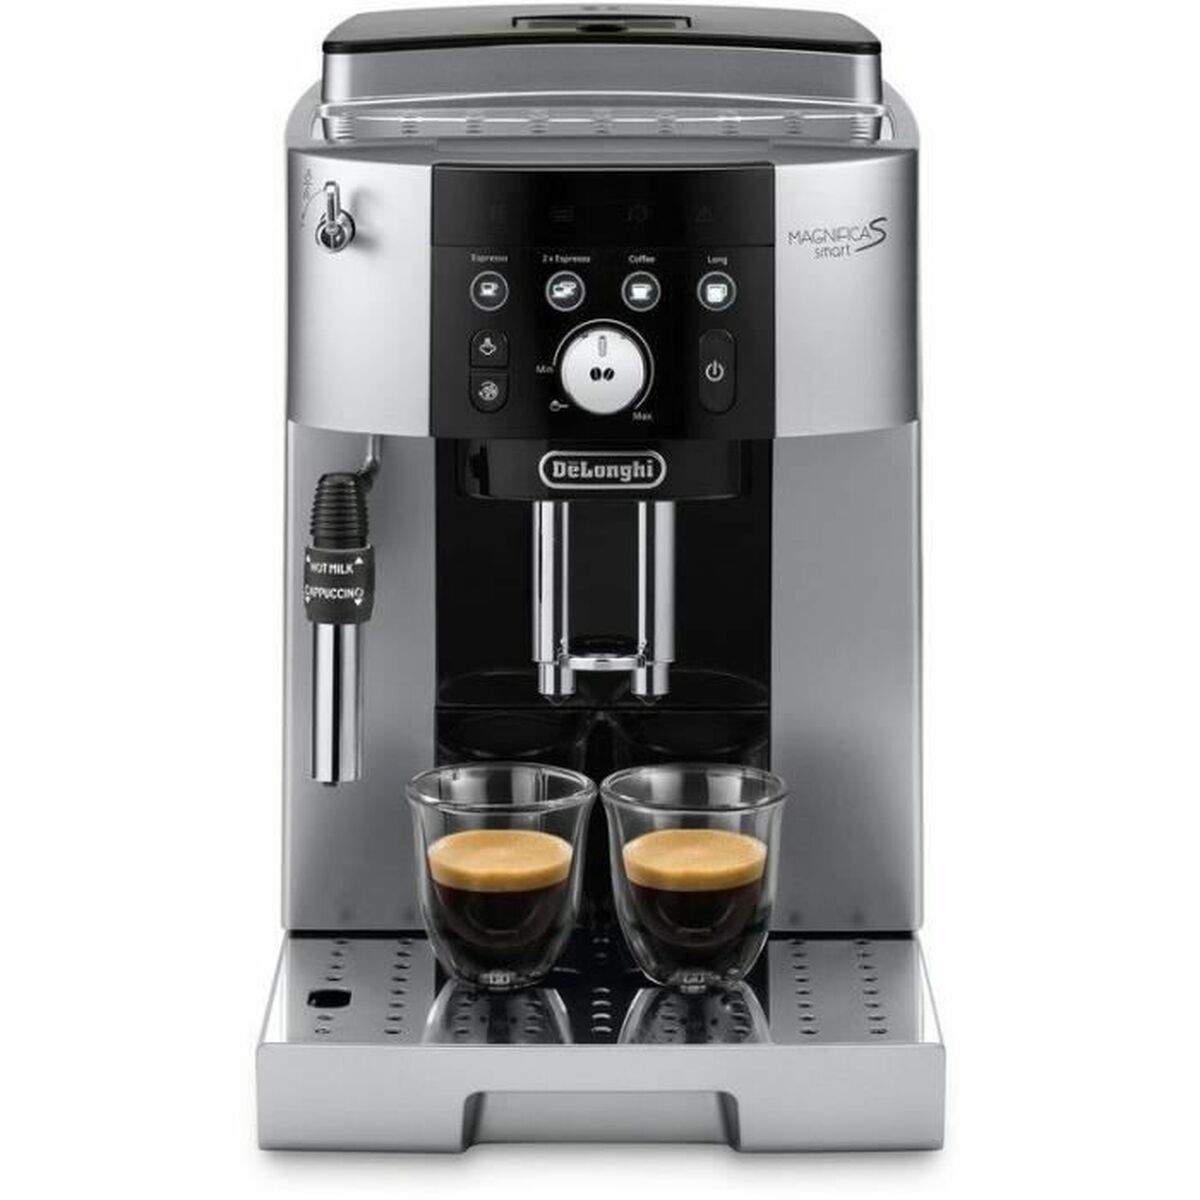 Superautomatische Kaffeemaschine DeLonghi MAGNIFICA S - CA International  